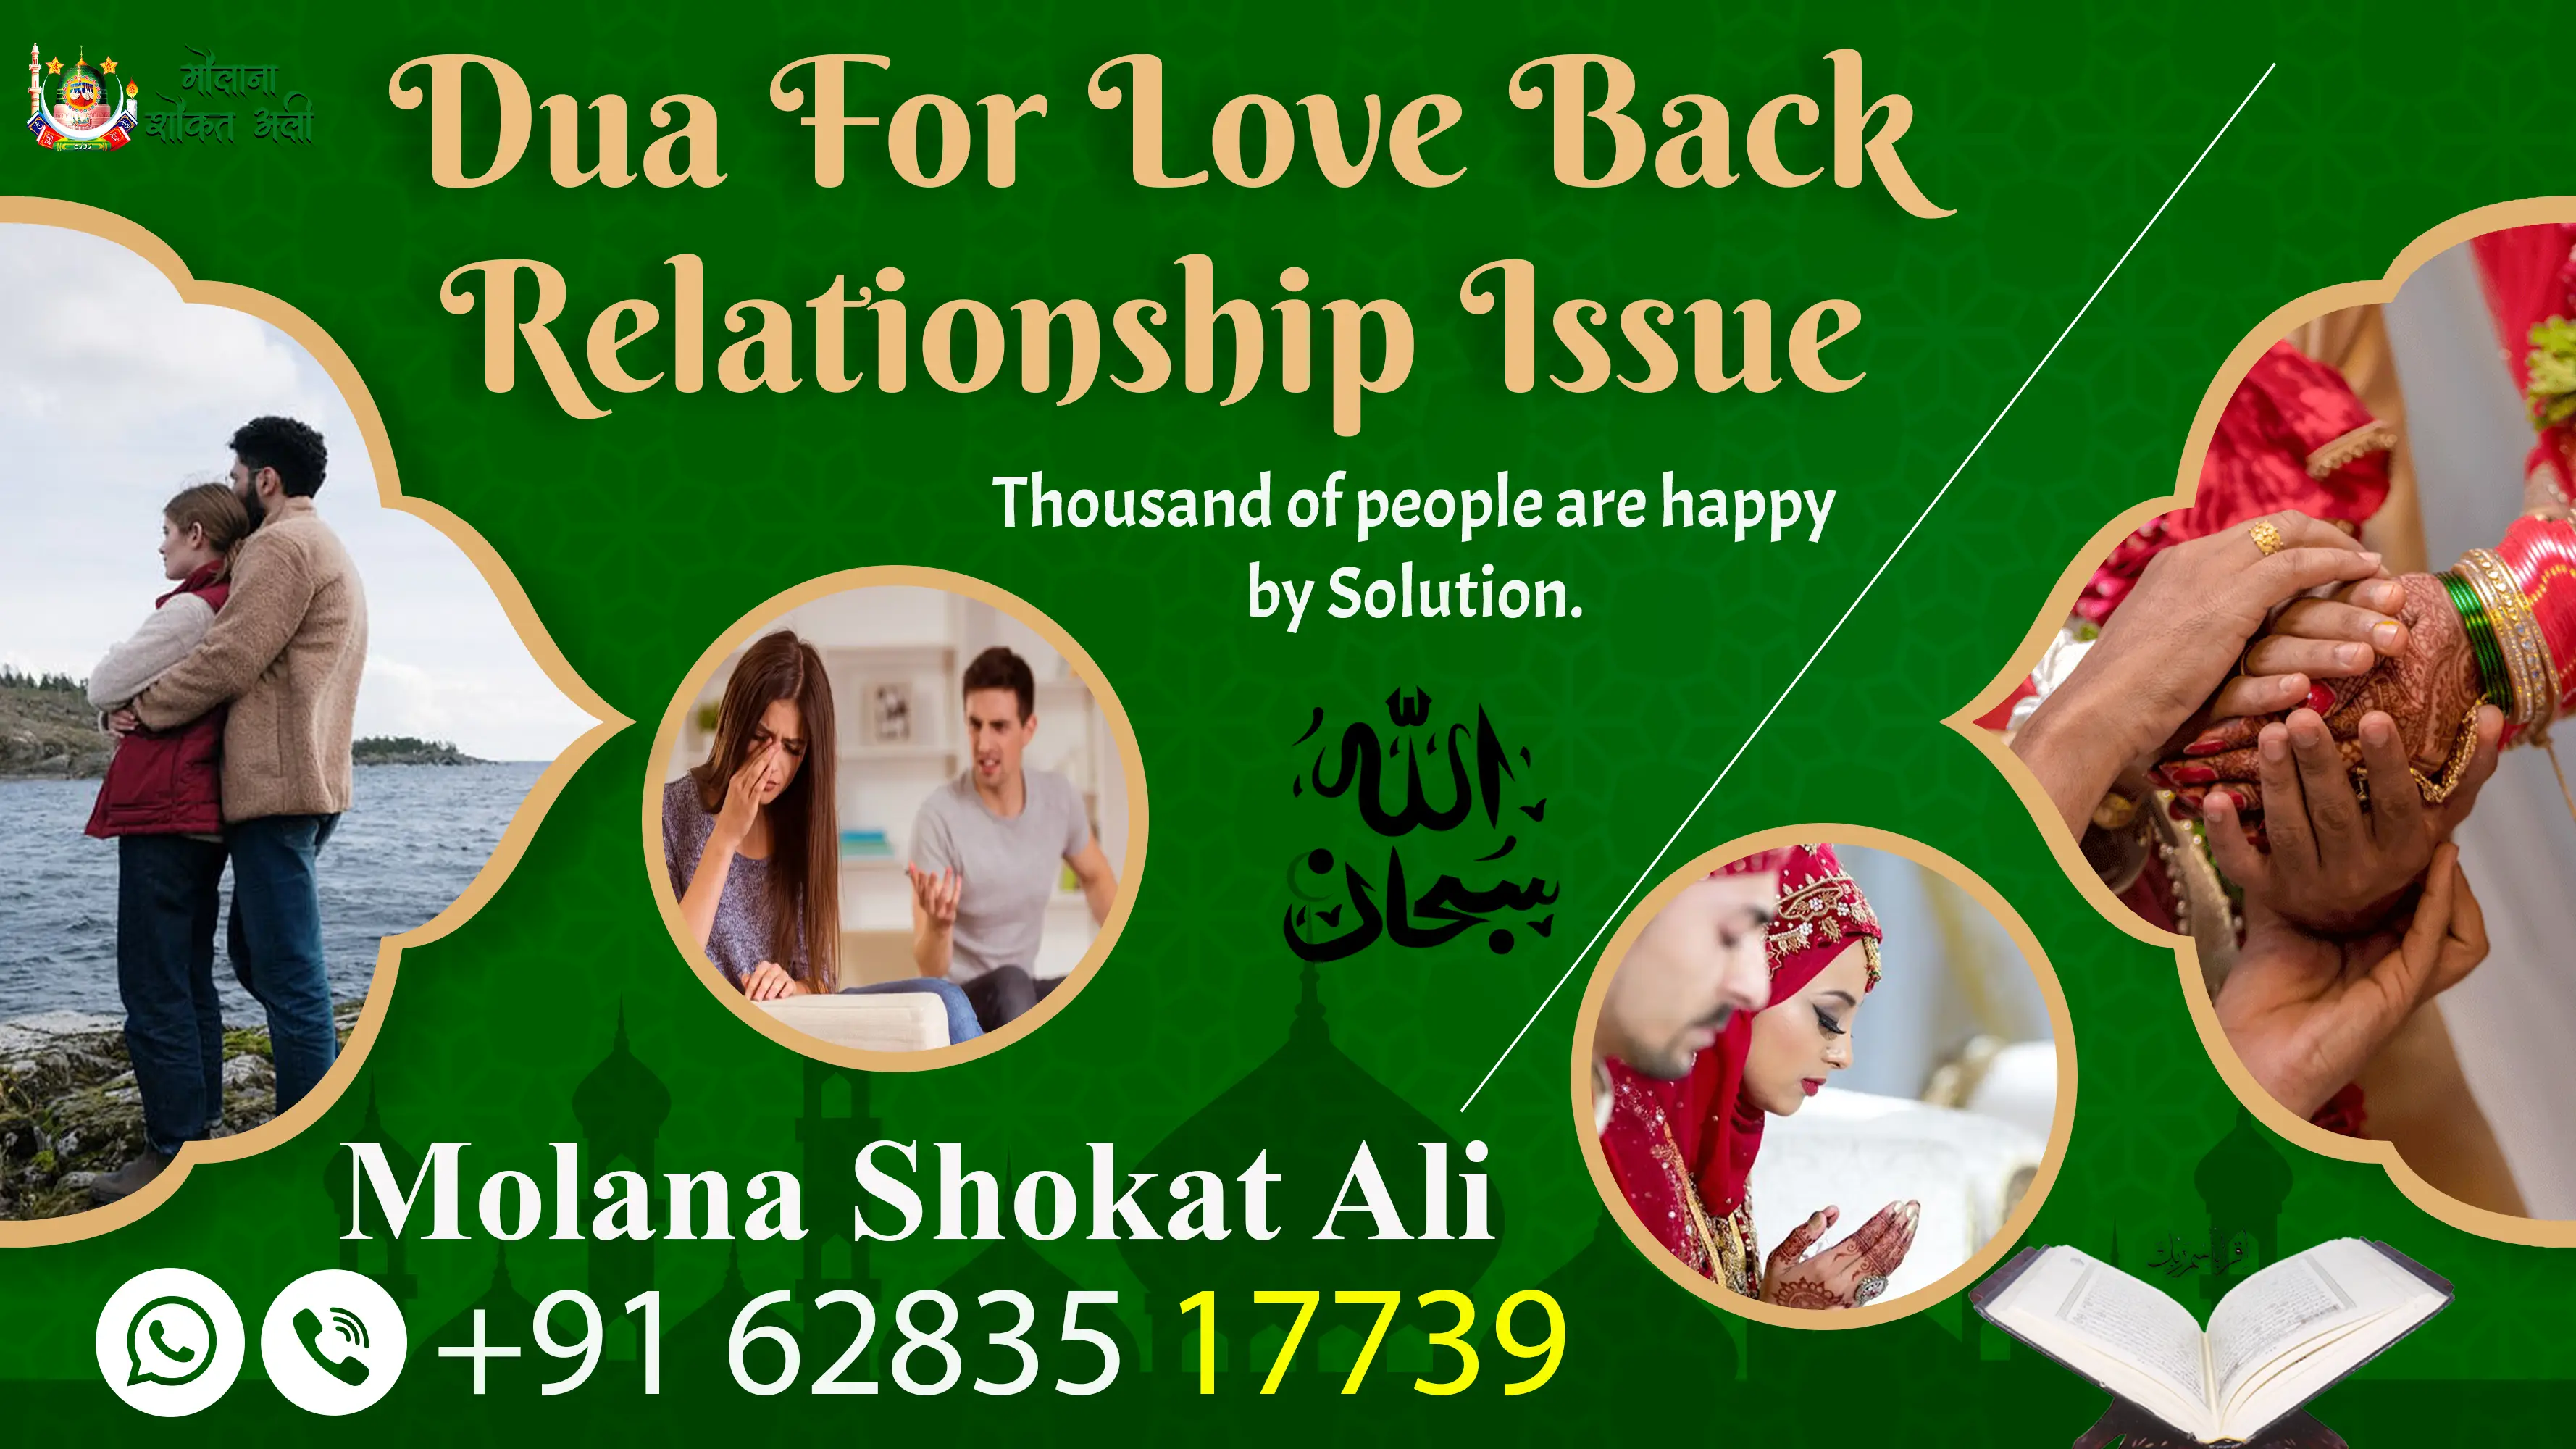 relationship issue Molana ji